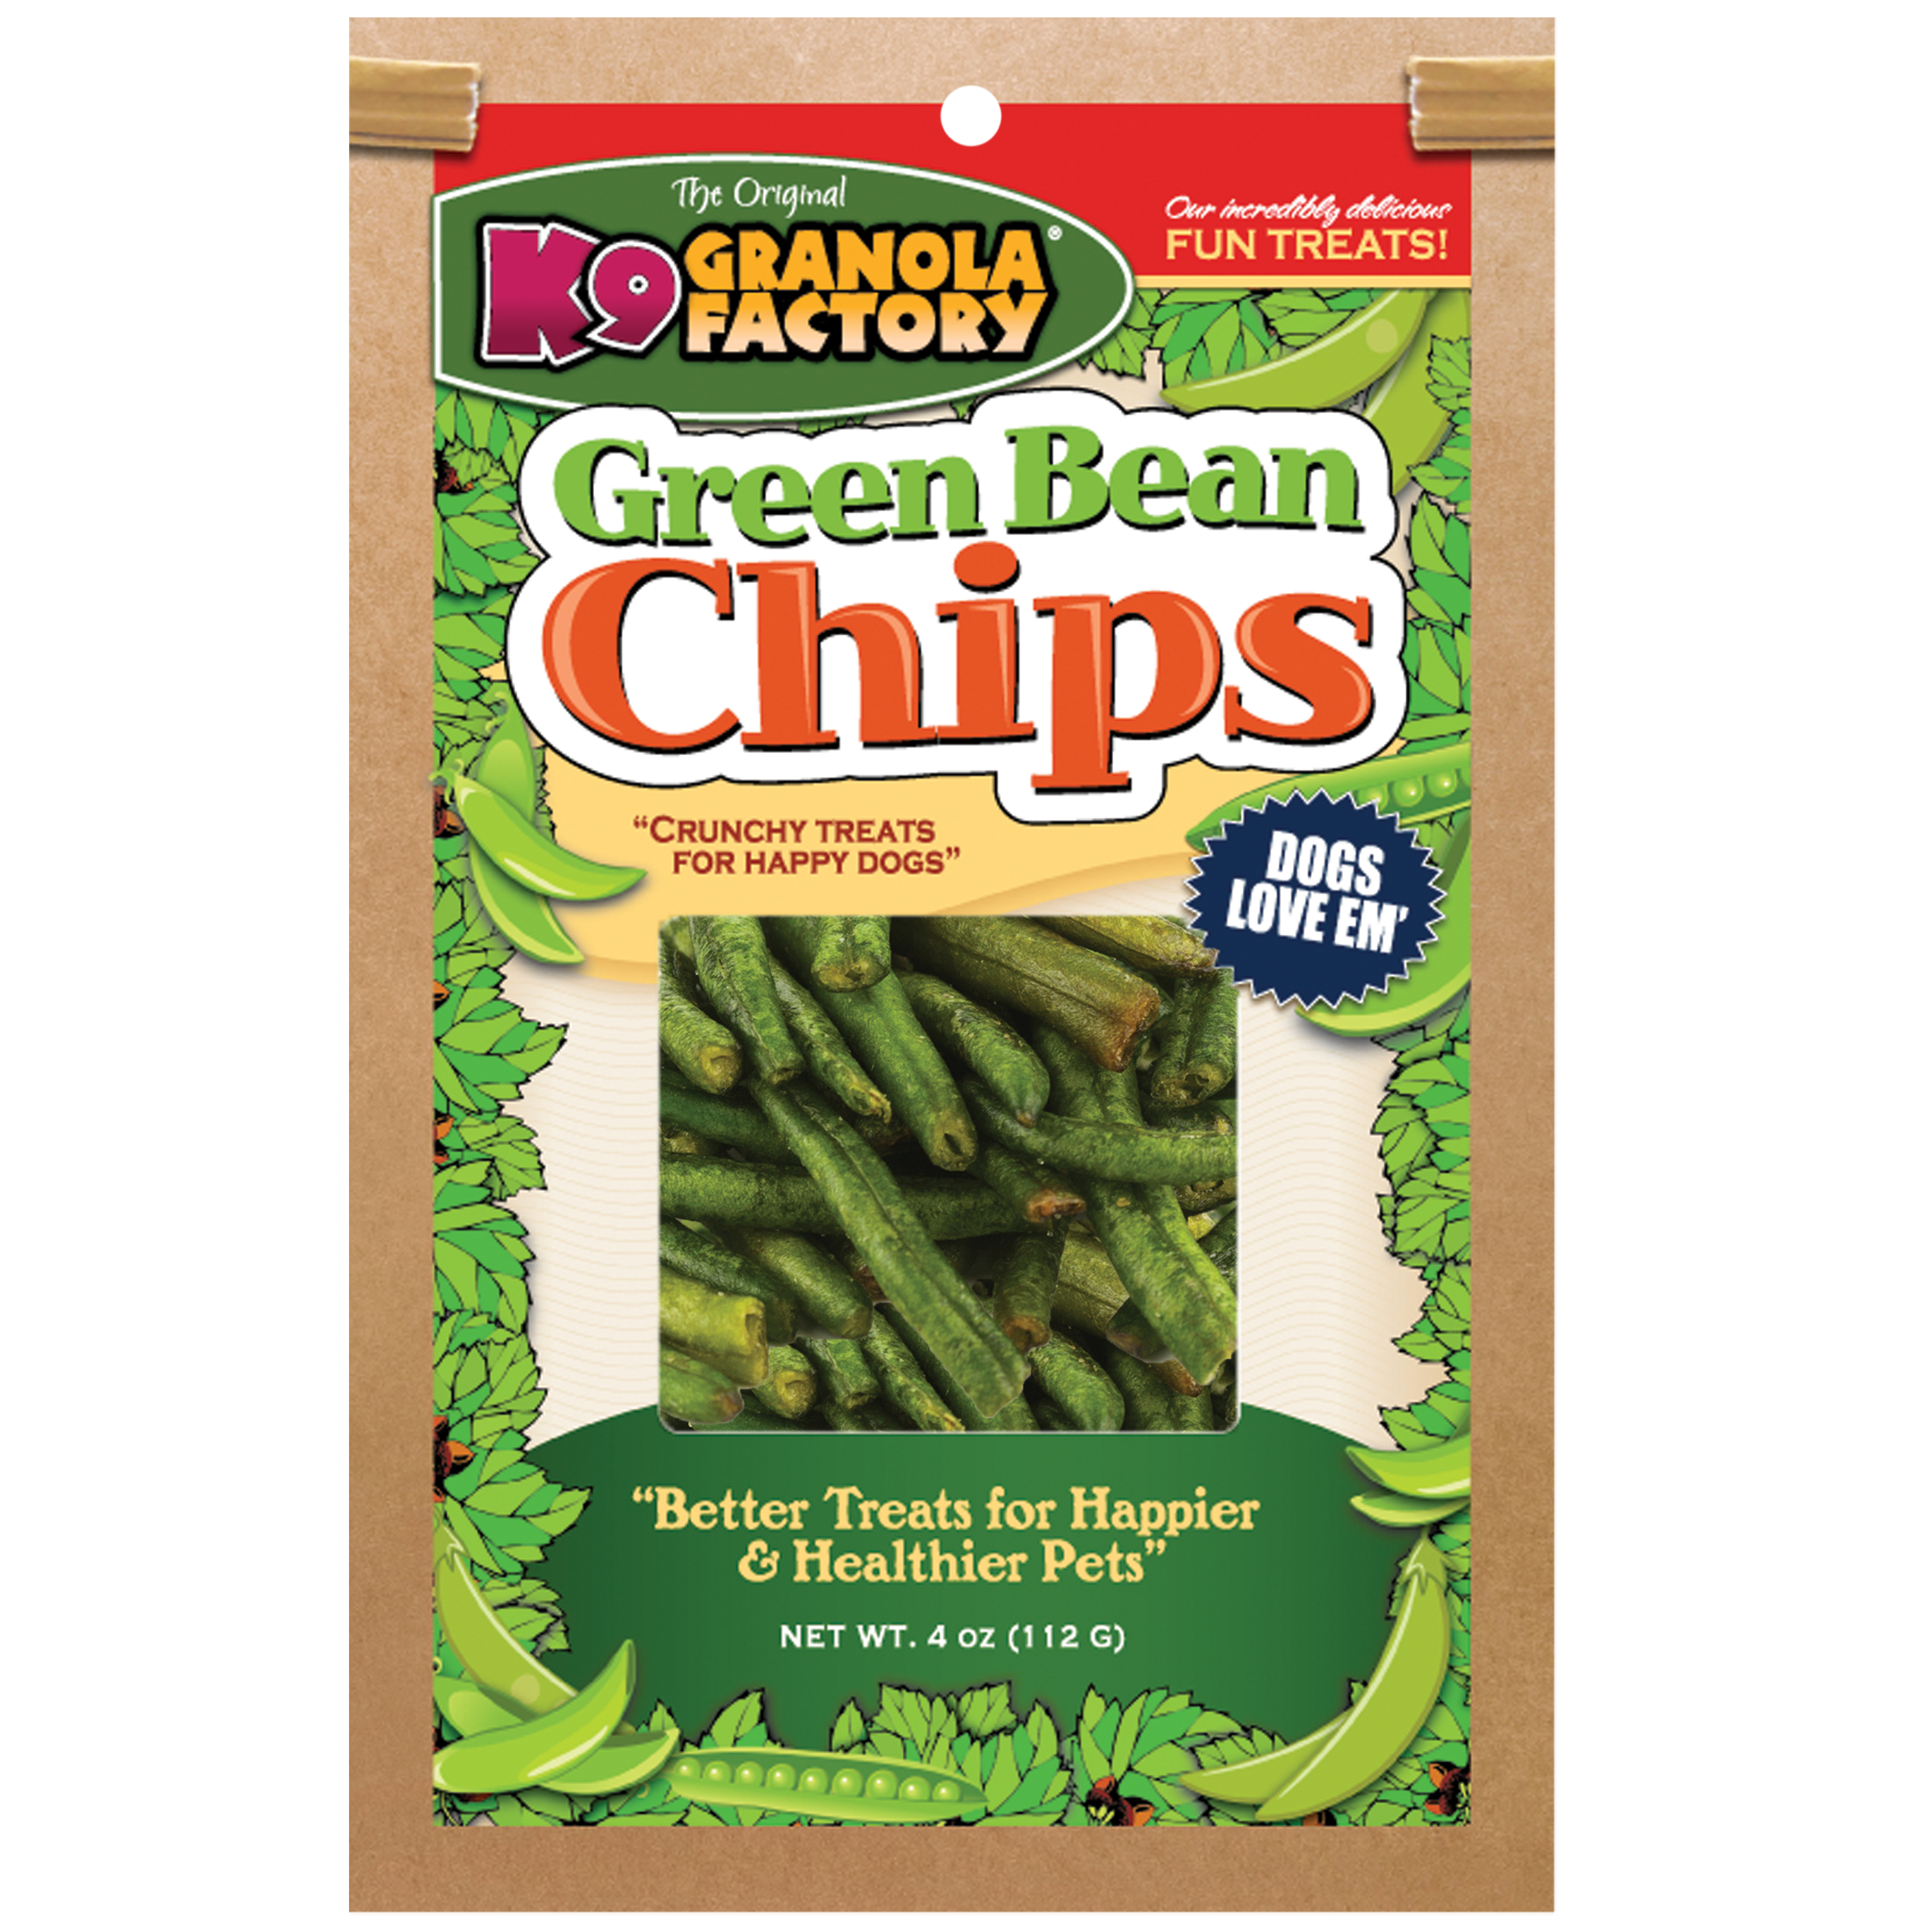 K9 Granola Factory Chip Collection Green Bean Chips Dog Treats, 5oz